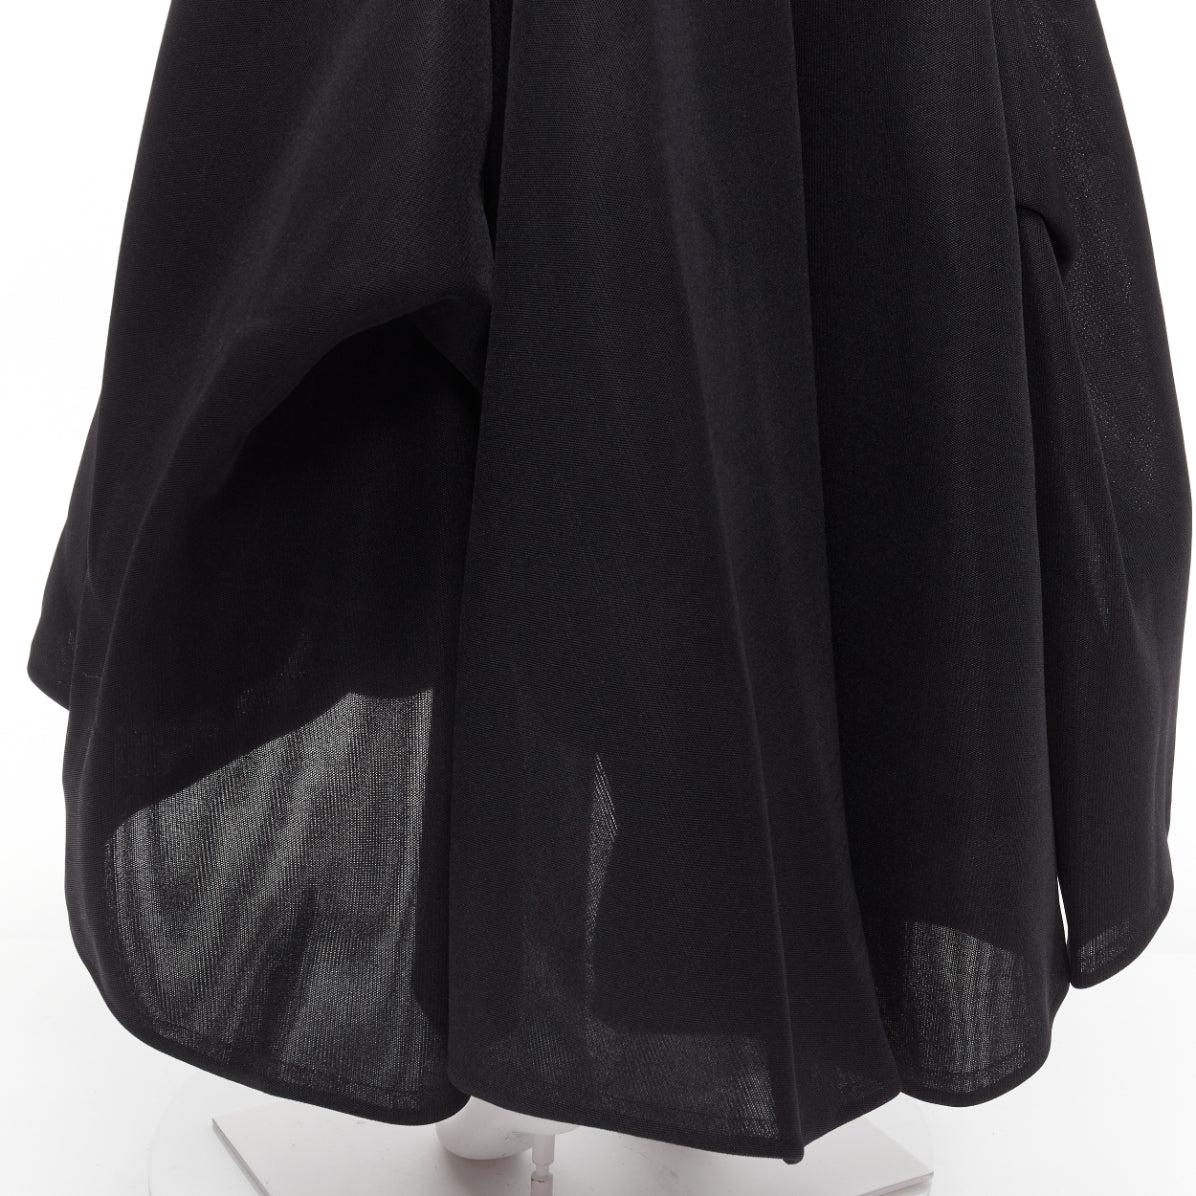 MATICEVSKI 2018 Ornament black peak bust boned corset midi gown AU8 M 3